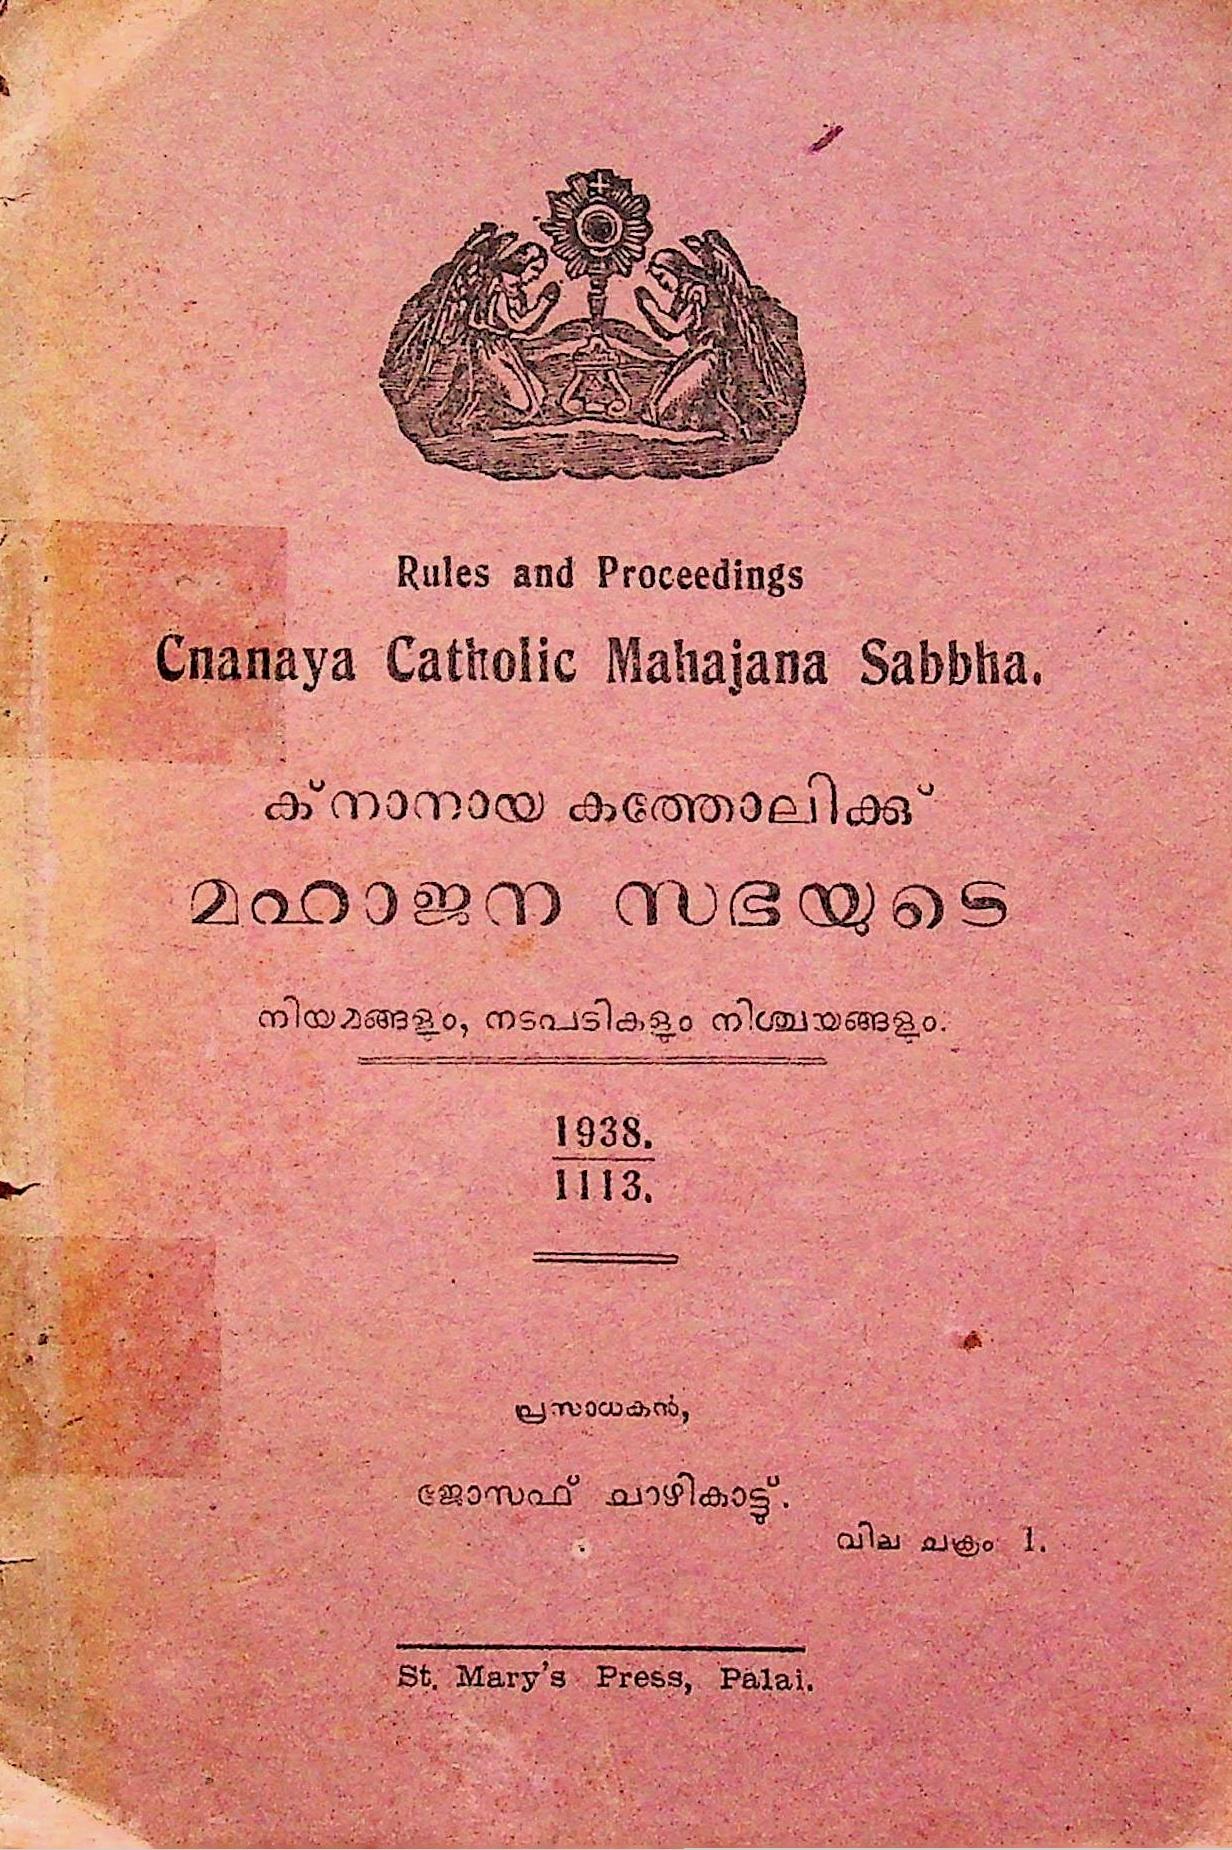 Knanaya Catholic Mahajana Sabha Bylaws 1938